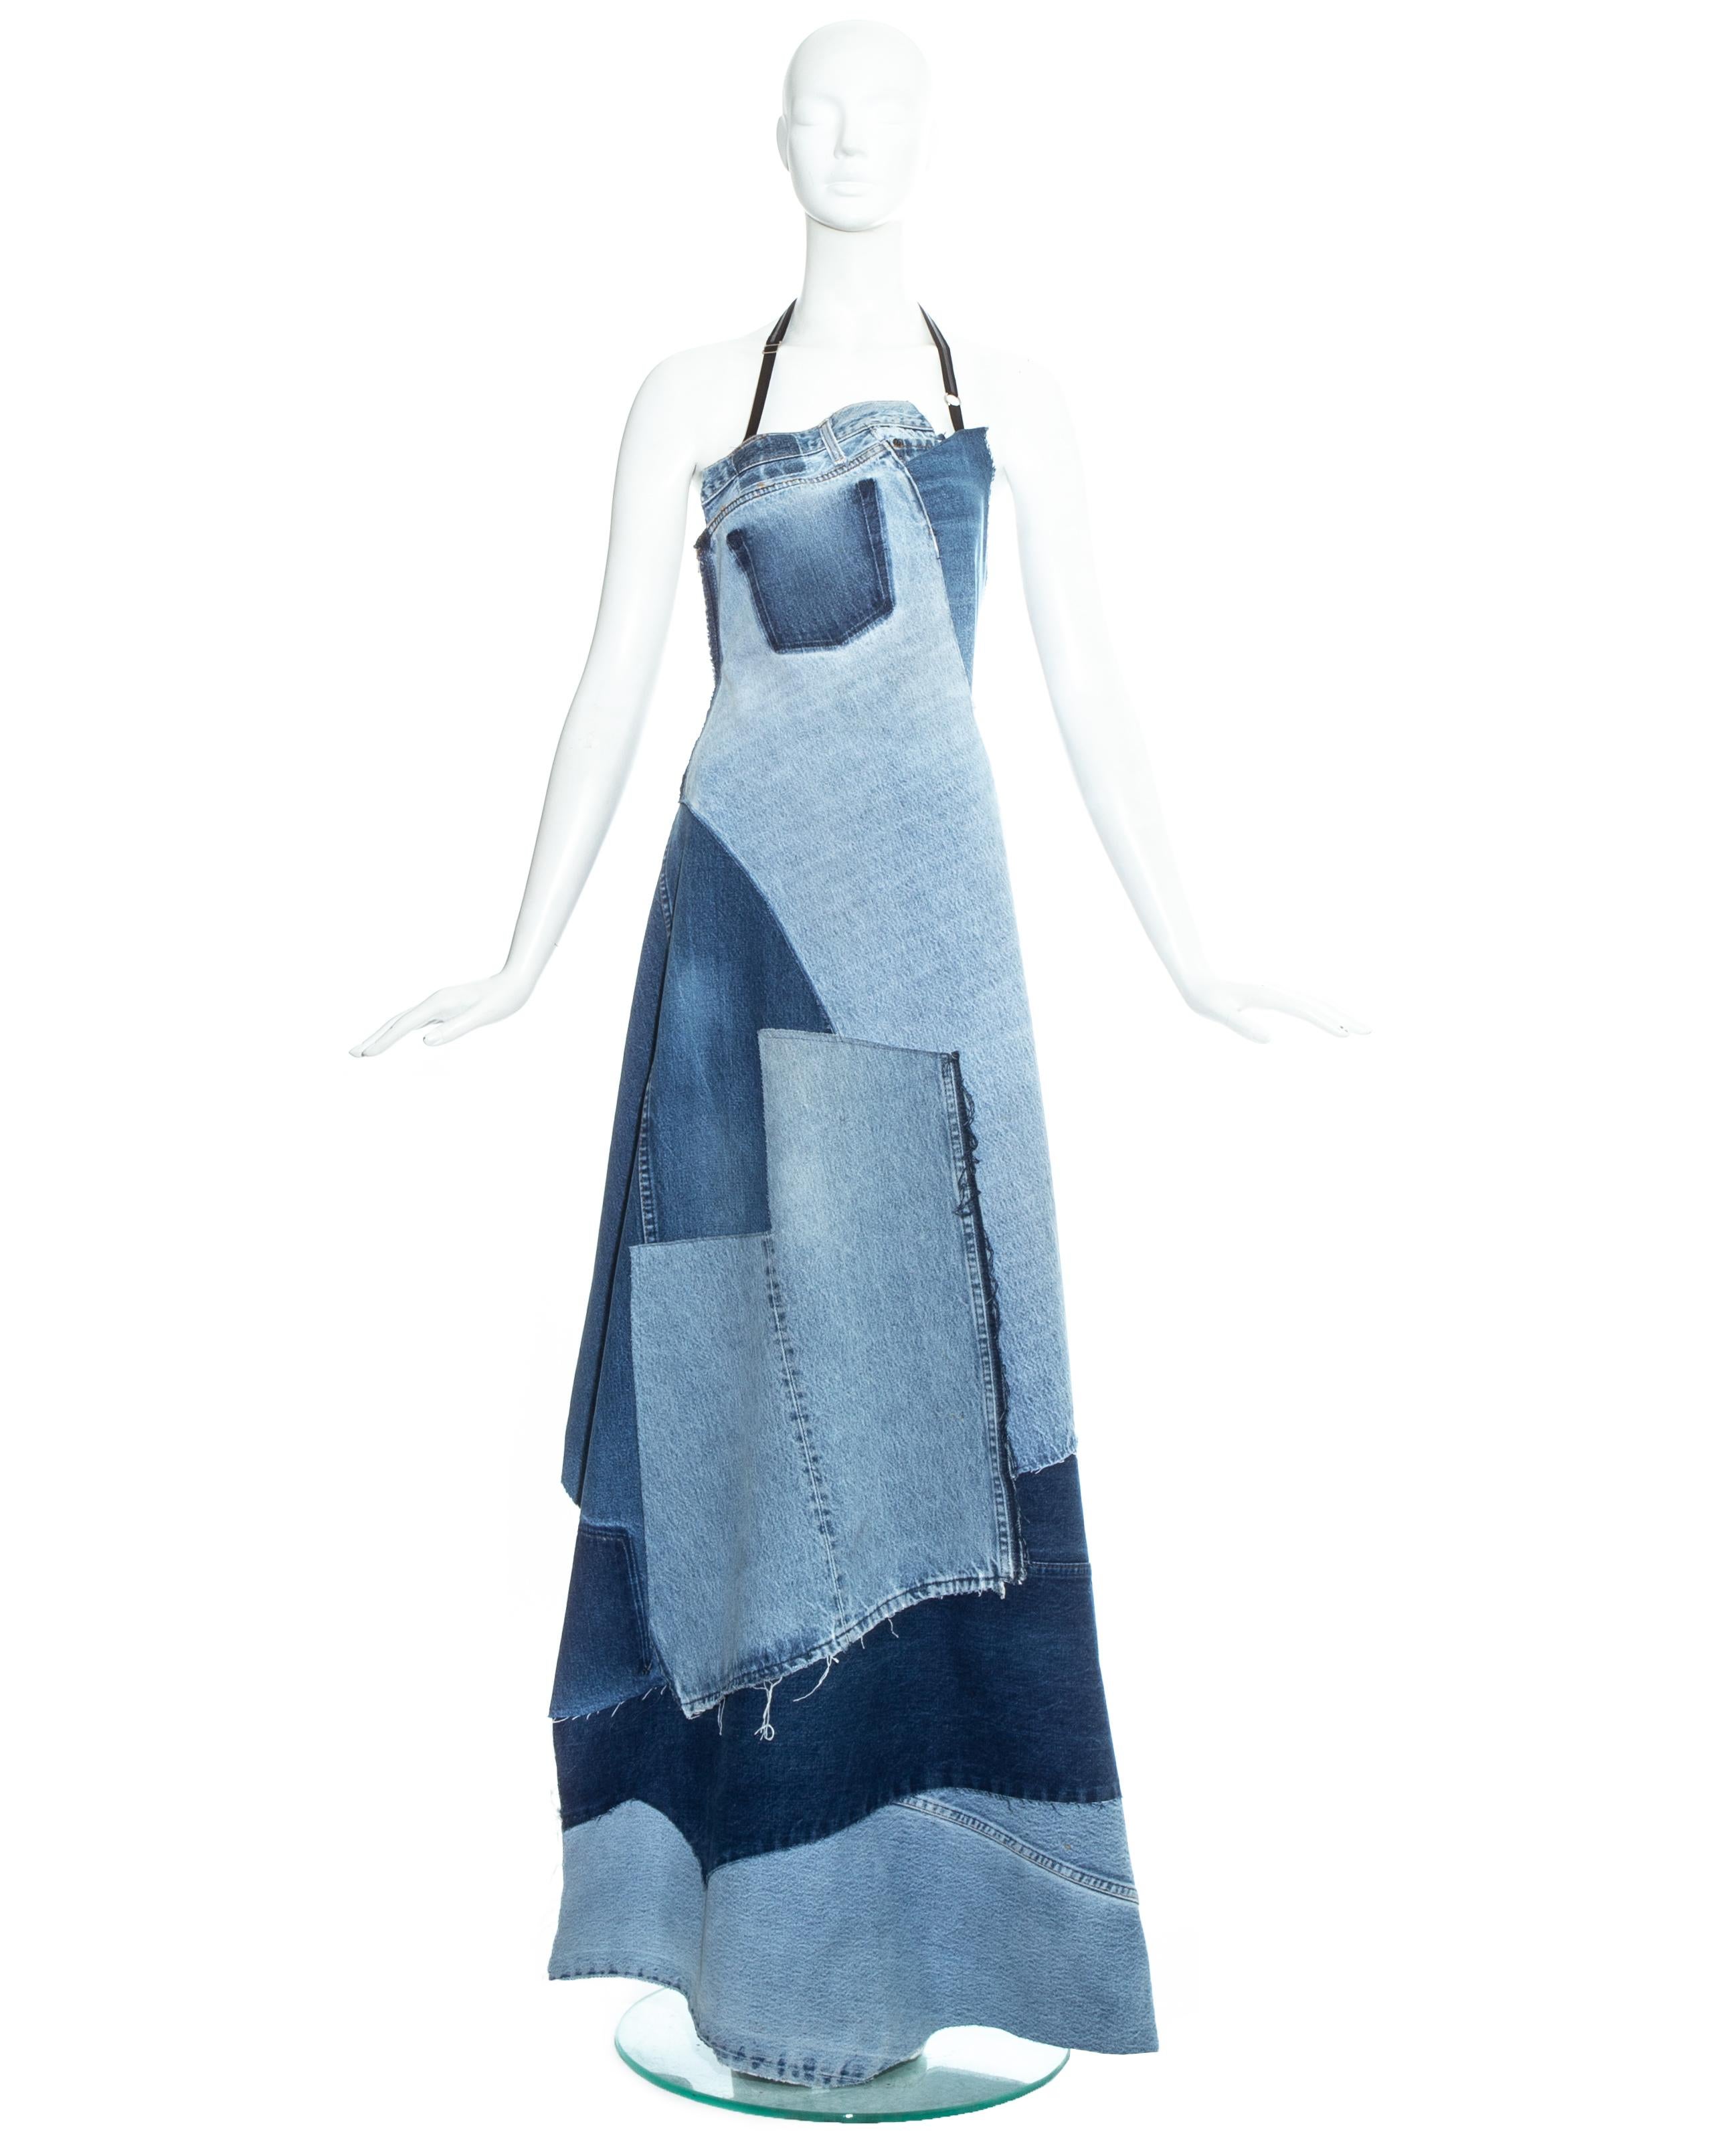 Martin Margiela; Artisanal denim apron maxi dress constructed from vintage jeans. Adjustable black elastic fastenings on neck and waist. 

Spring-Summer 1999